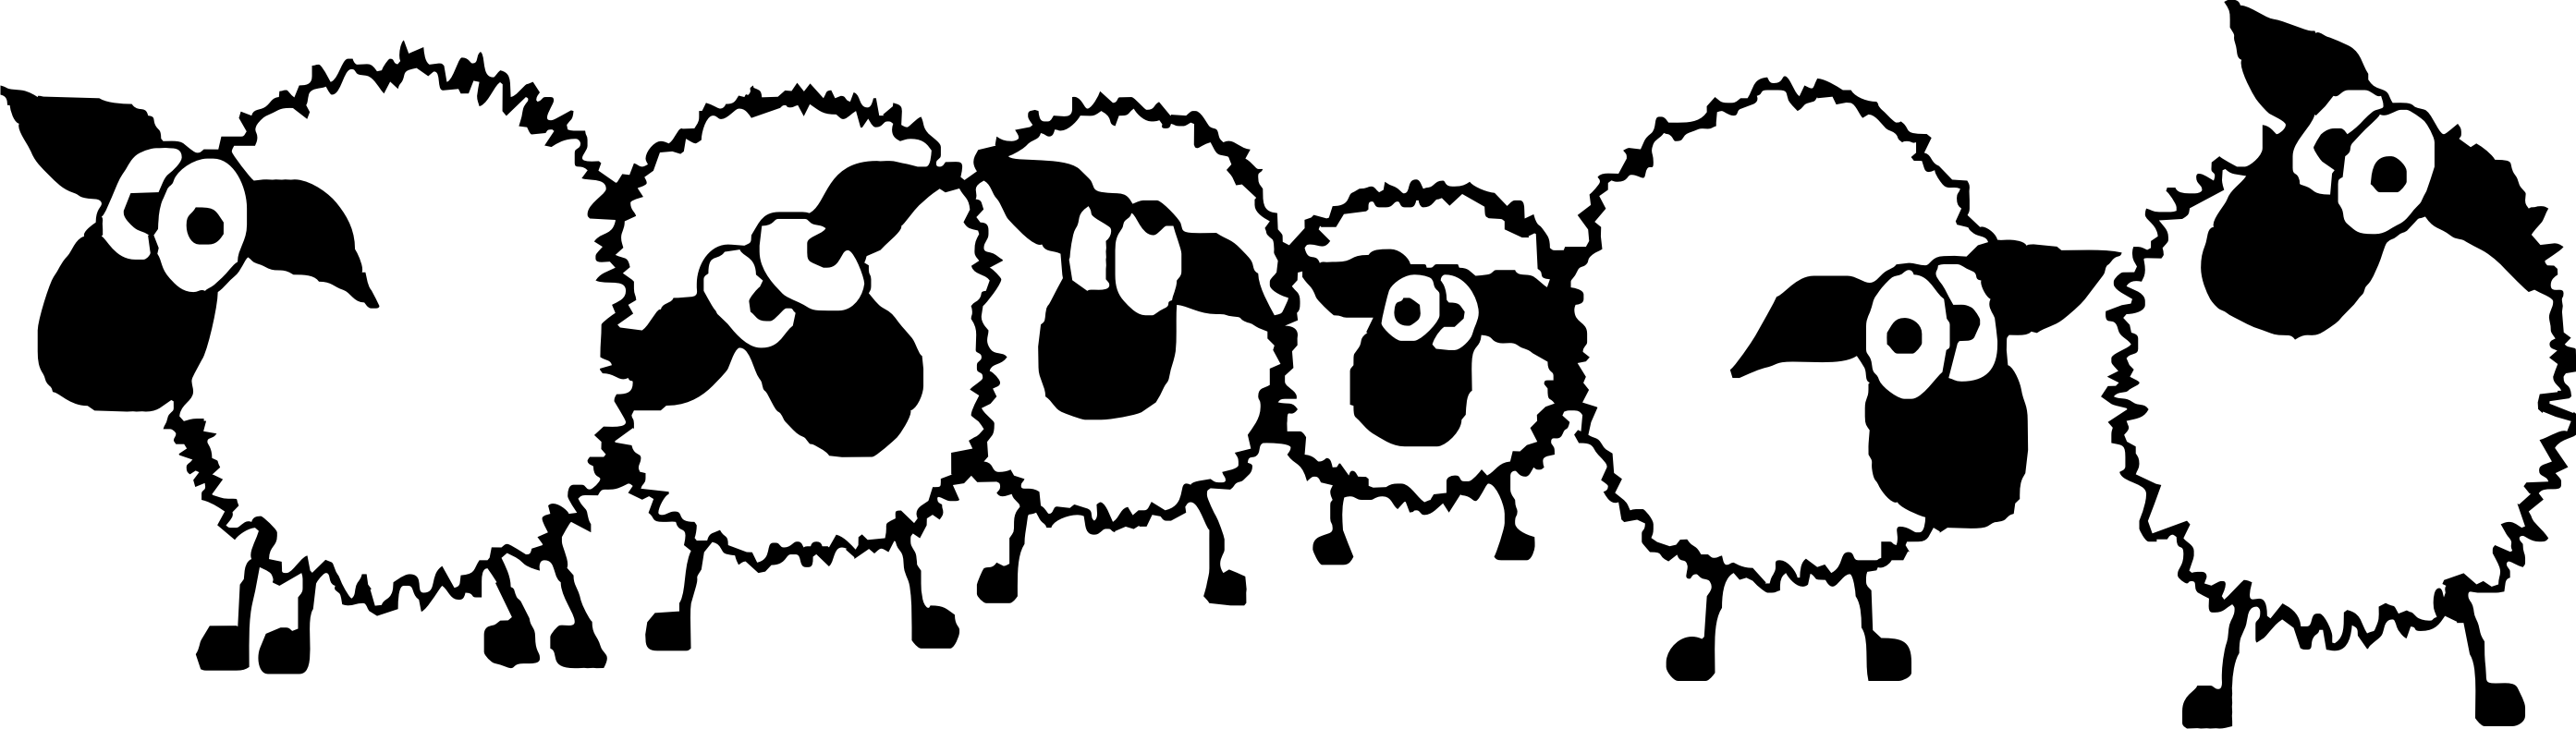 Sheep clipart wikiclipart.